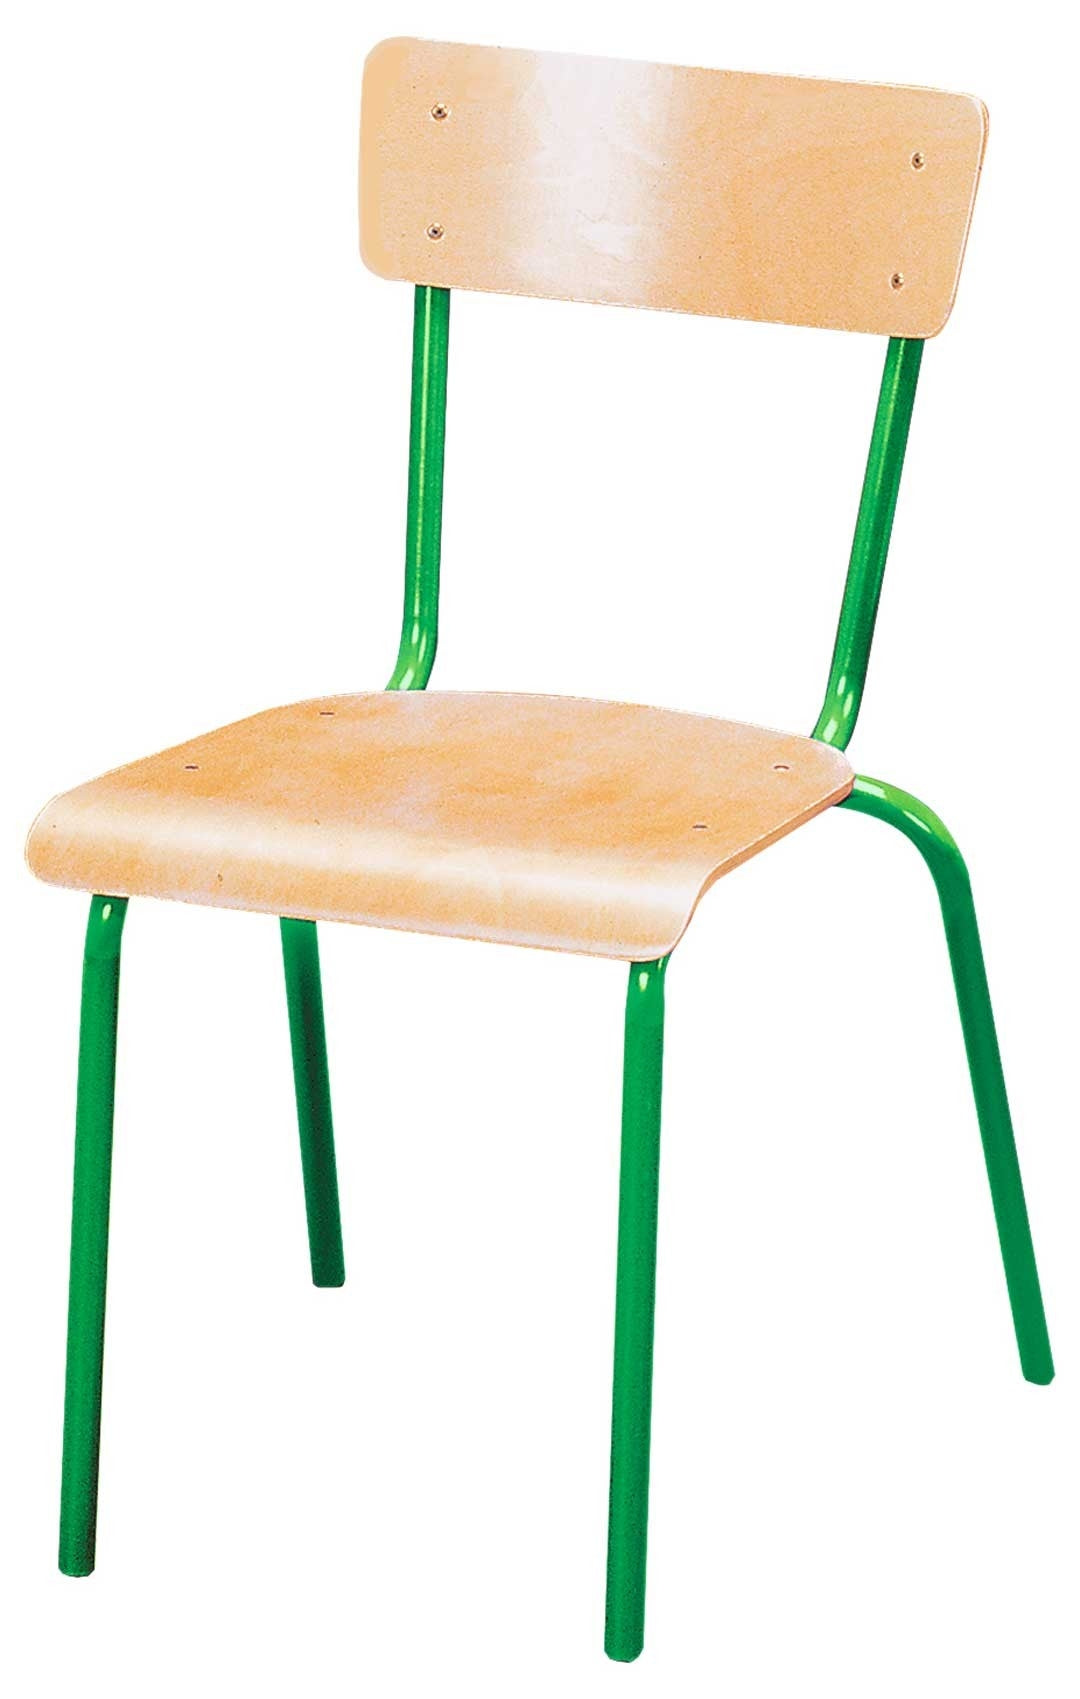 Steel Chair - Green 31cm 